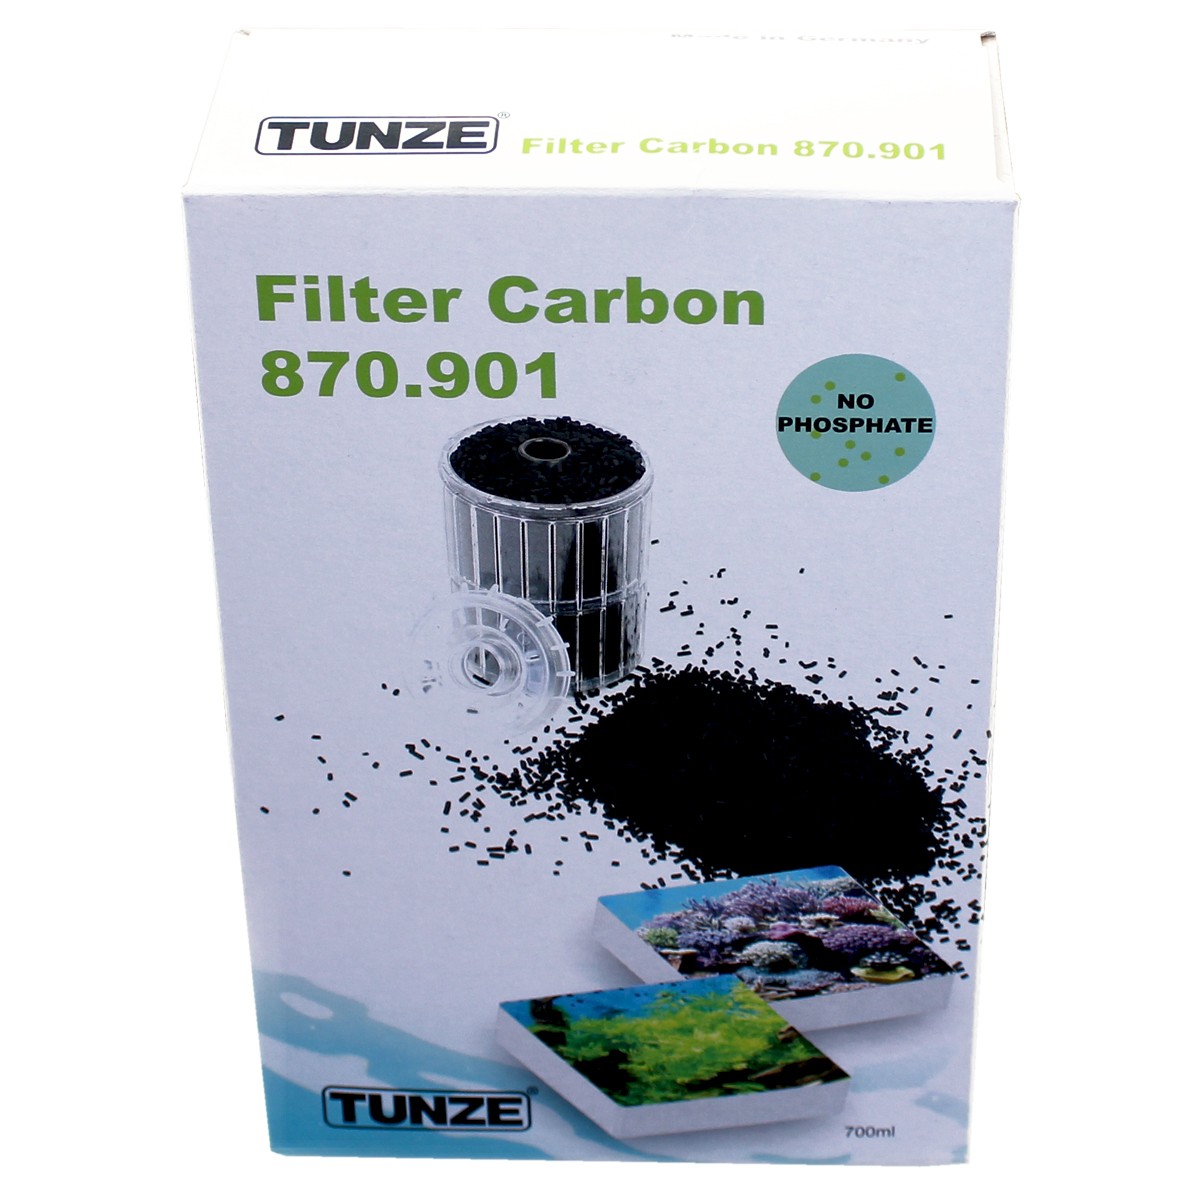  Filter Carbon (0870.901)